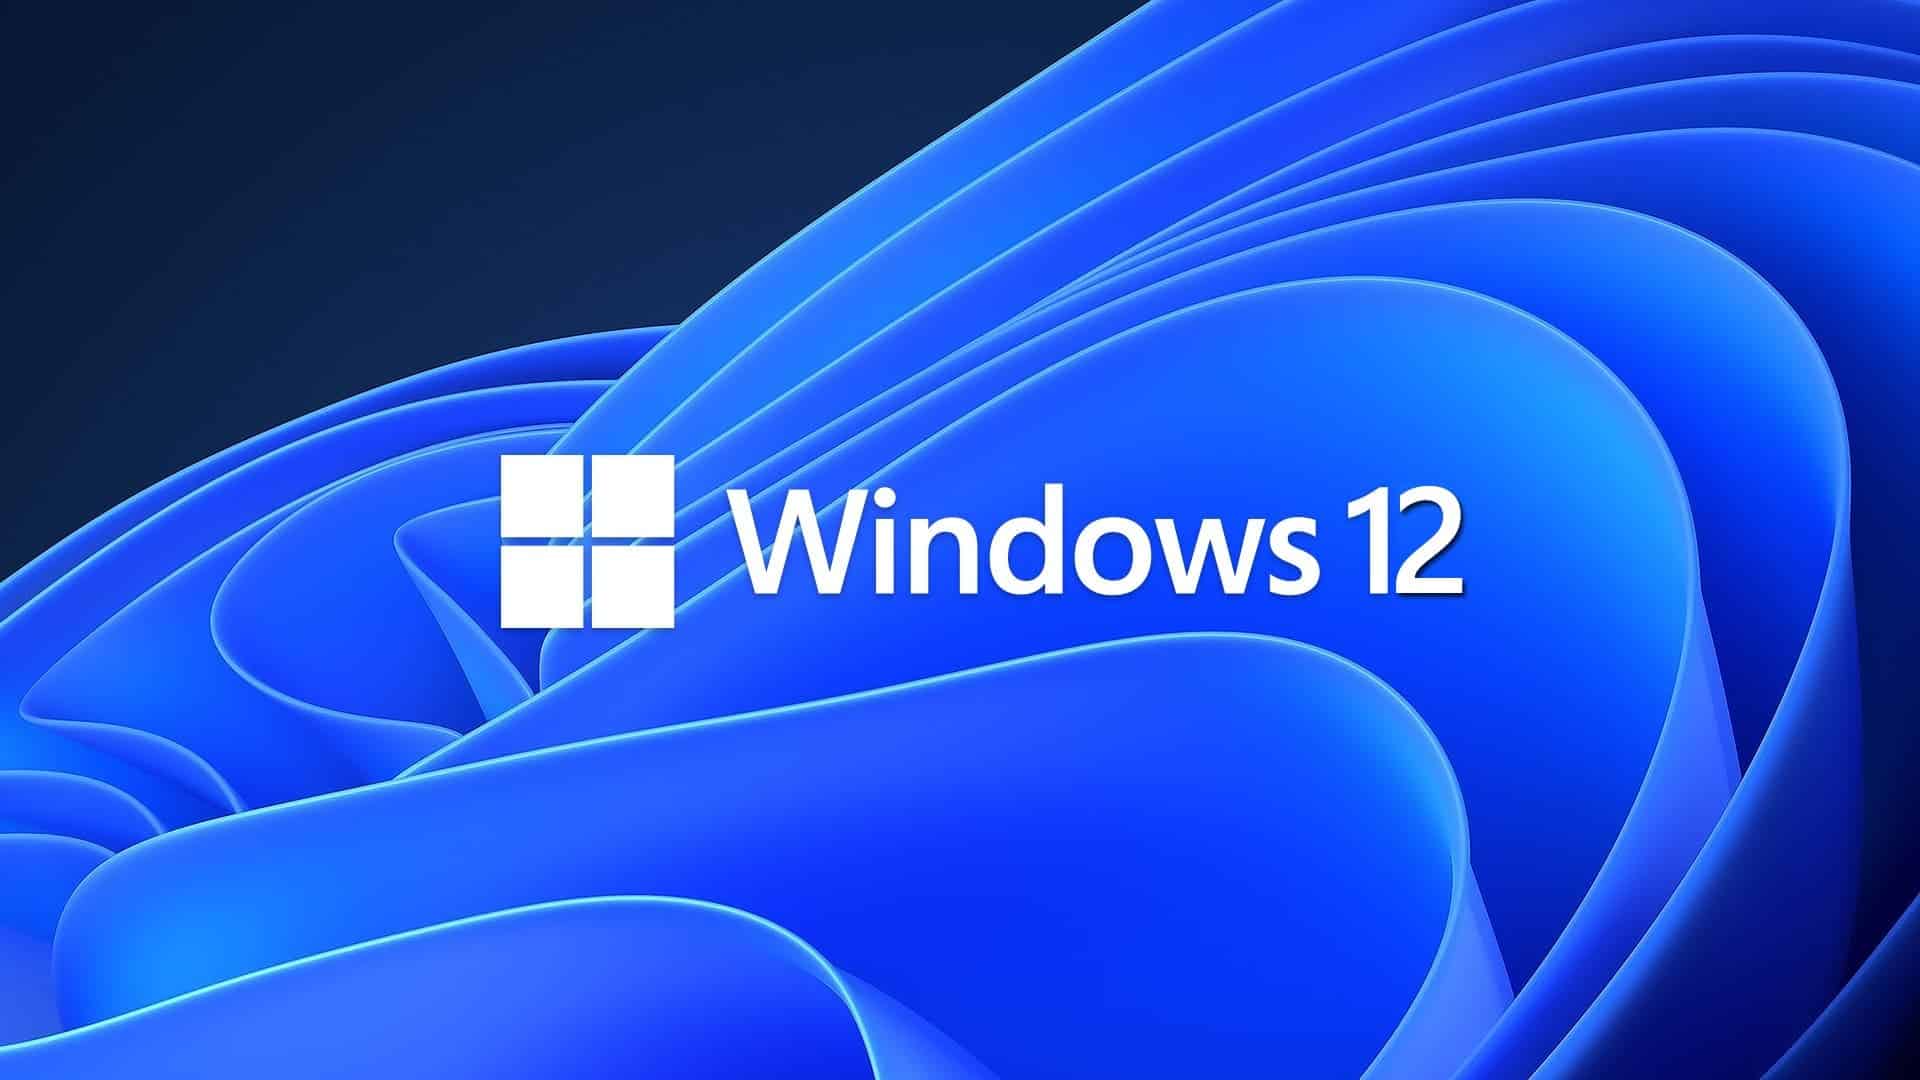 Windows 12 New Wallpaper by RtxPlayerMinecraft on DeviantArt